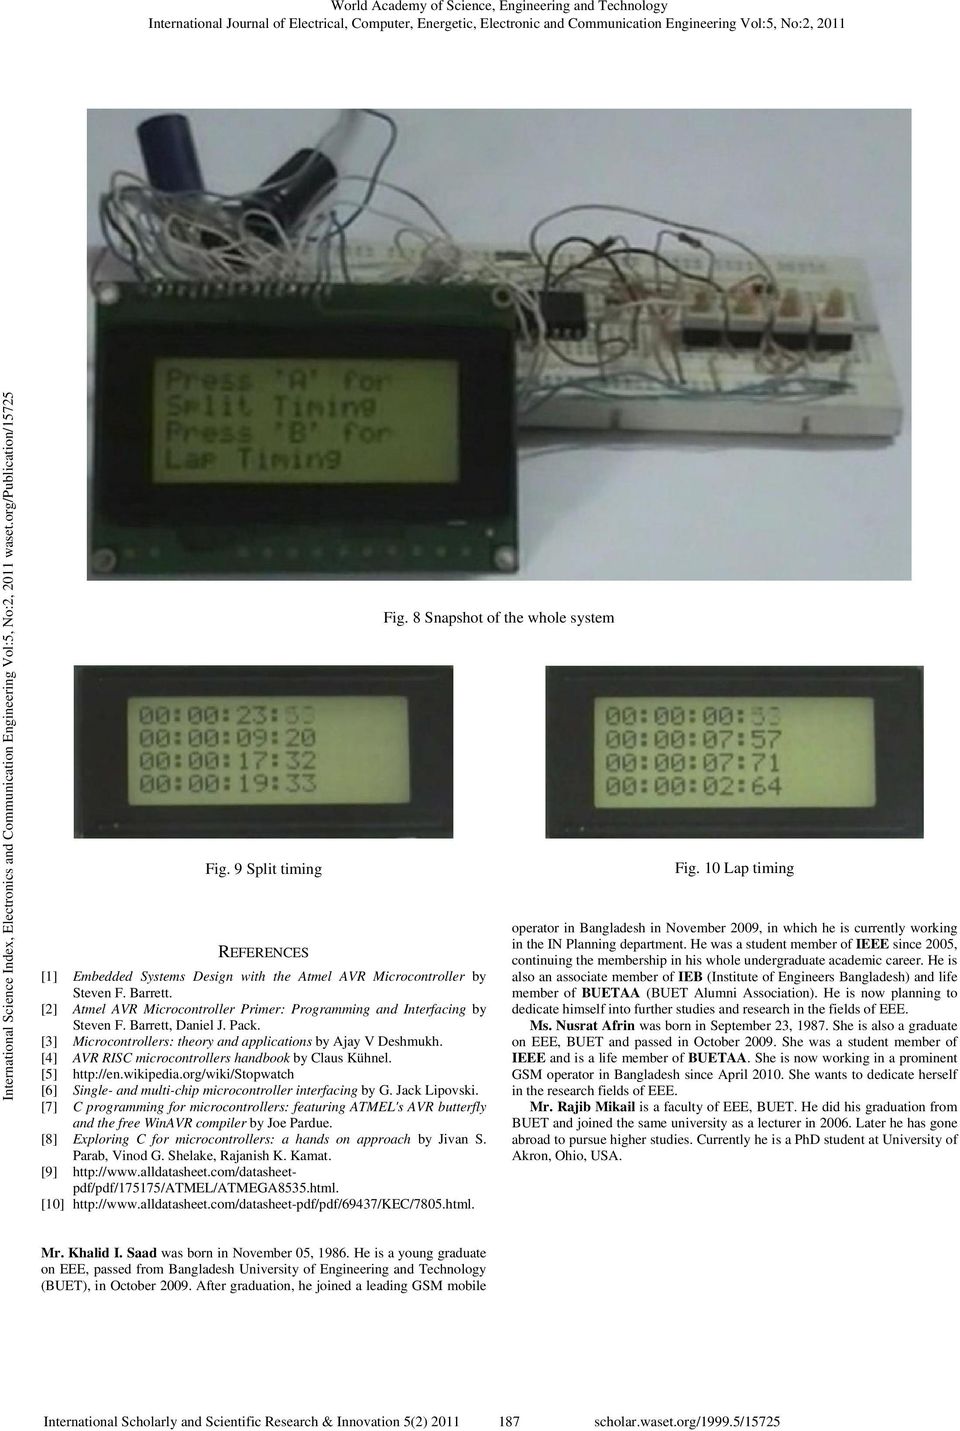 org/wiki/stopwatch [6] Single- and multi-chip microcontroller interfacing by G. Jack Lipovski.